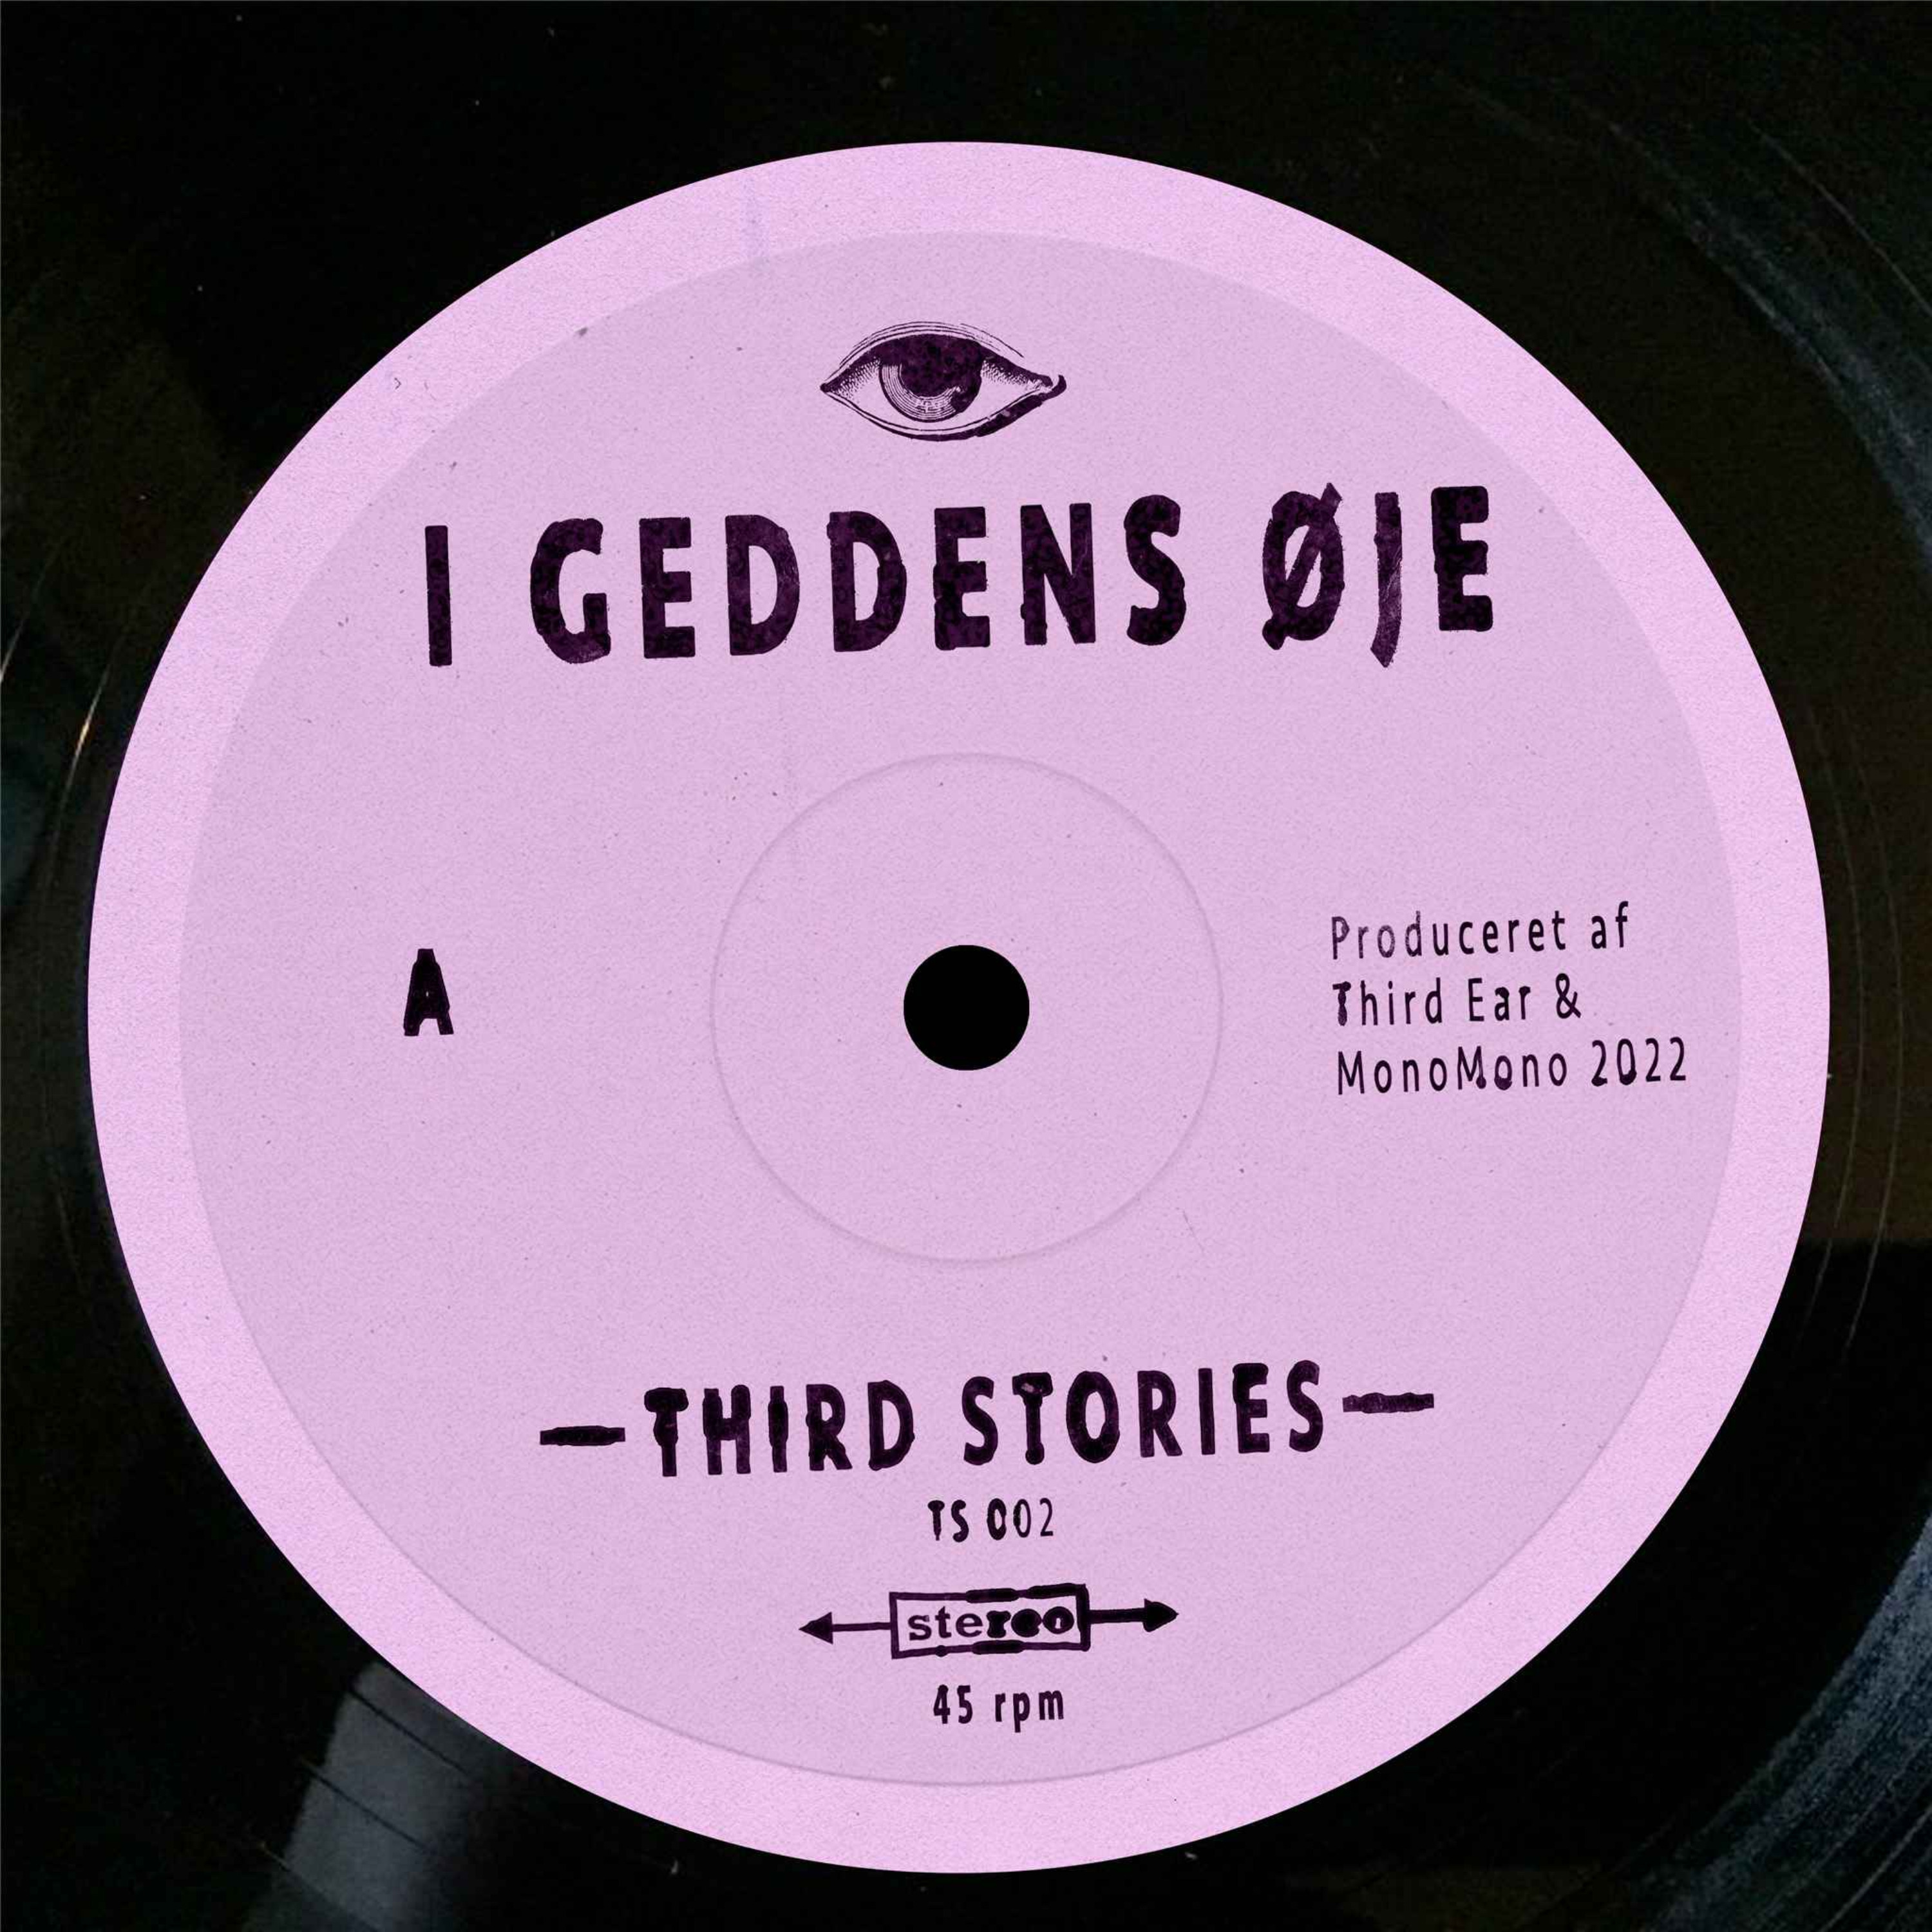 Third Stories: I geddens øje